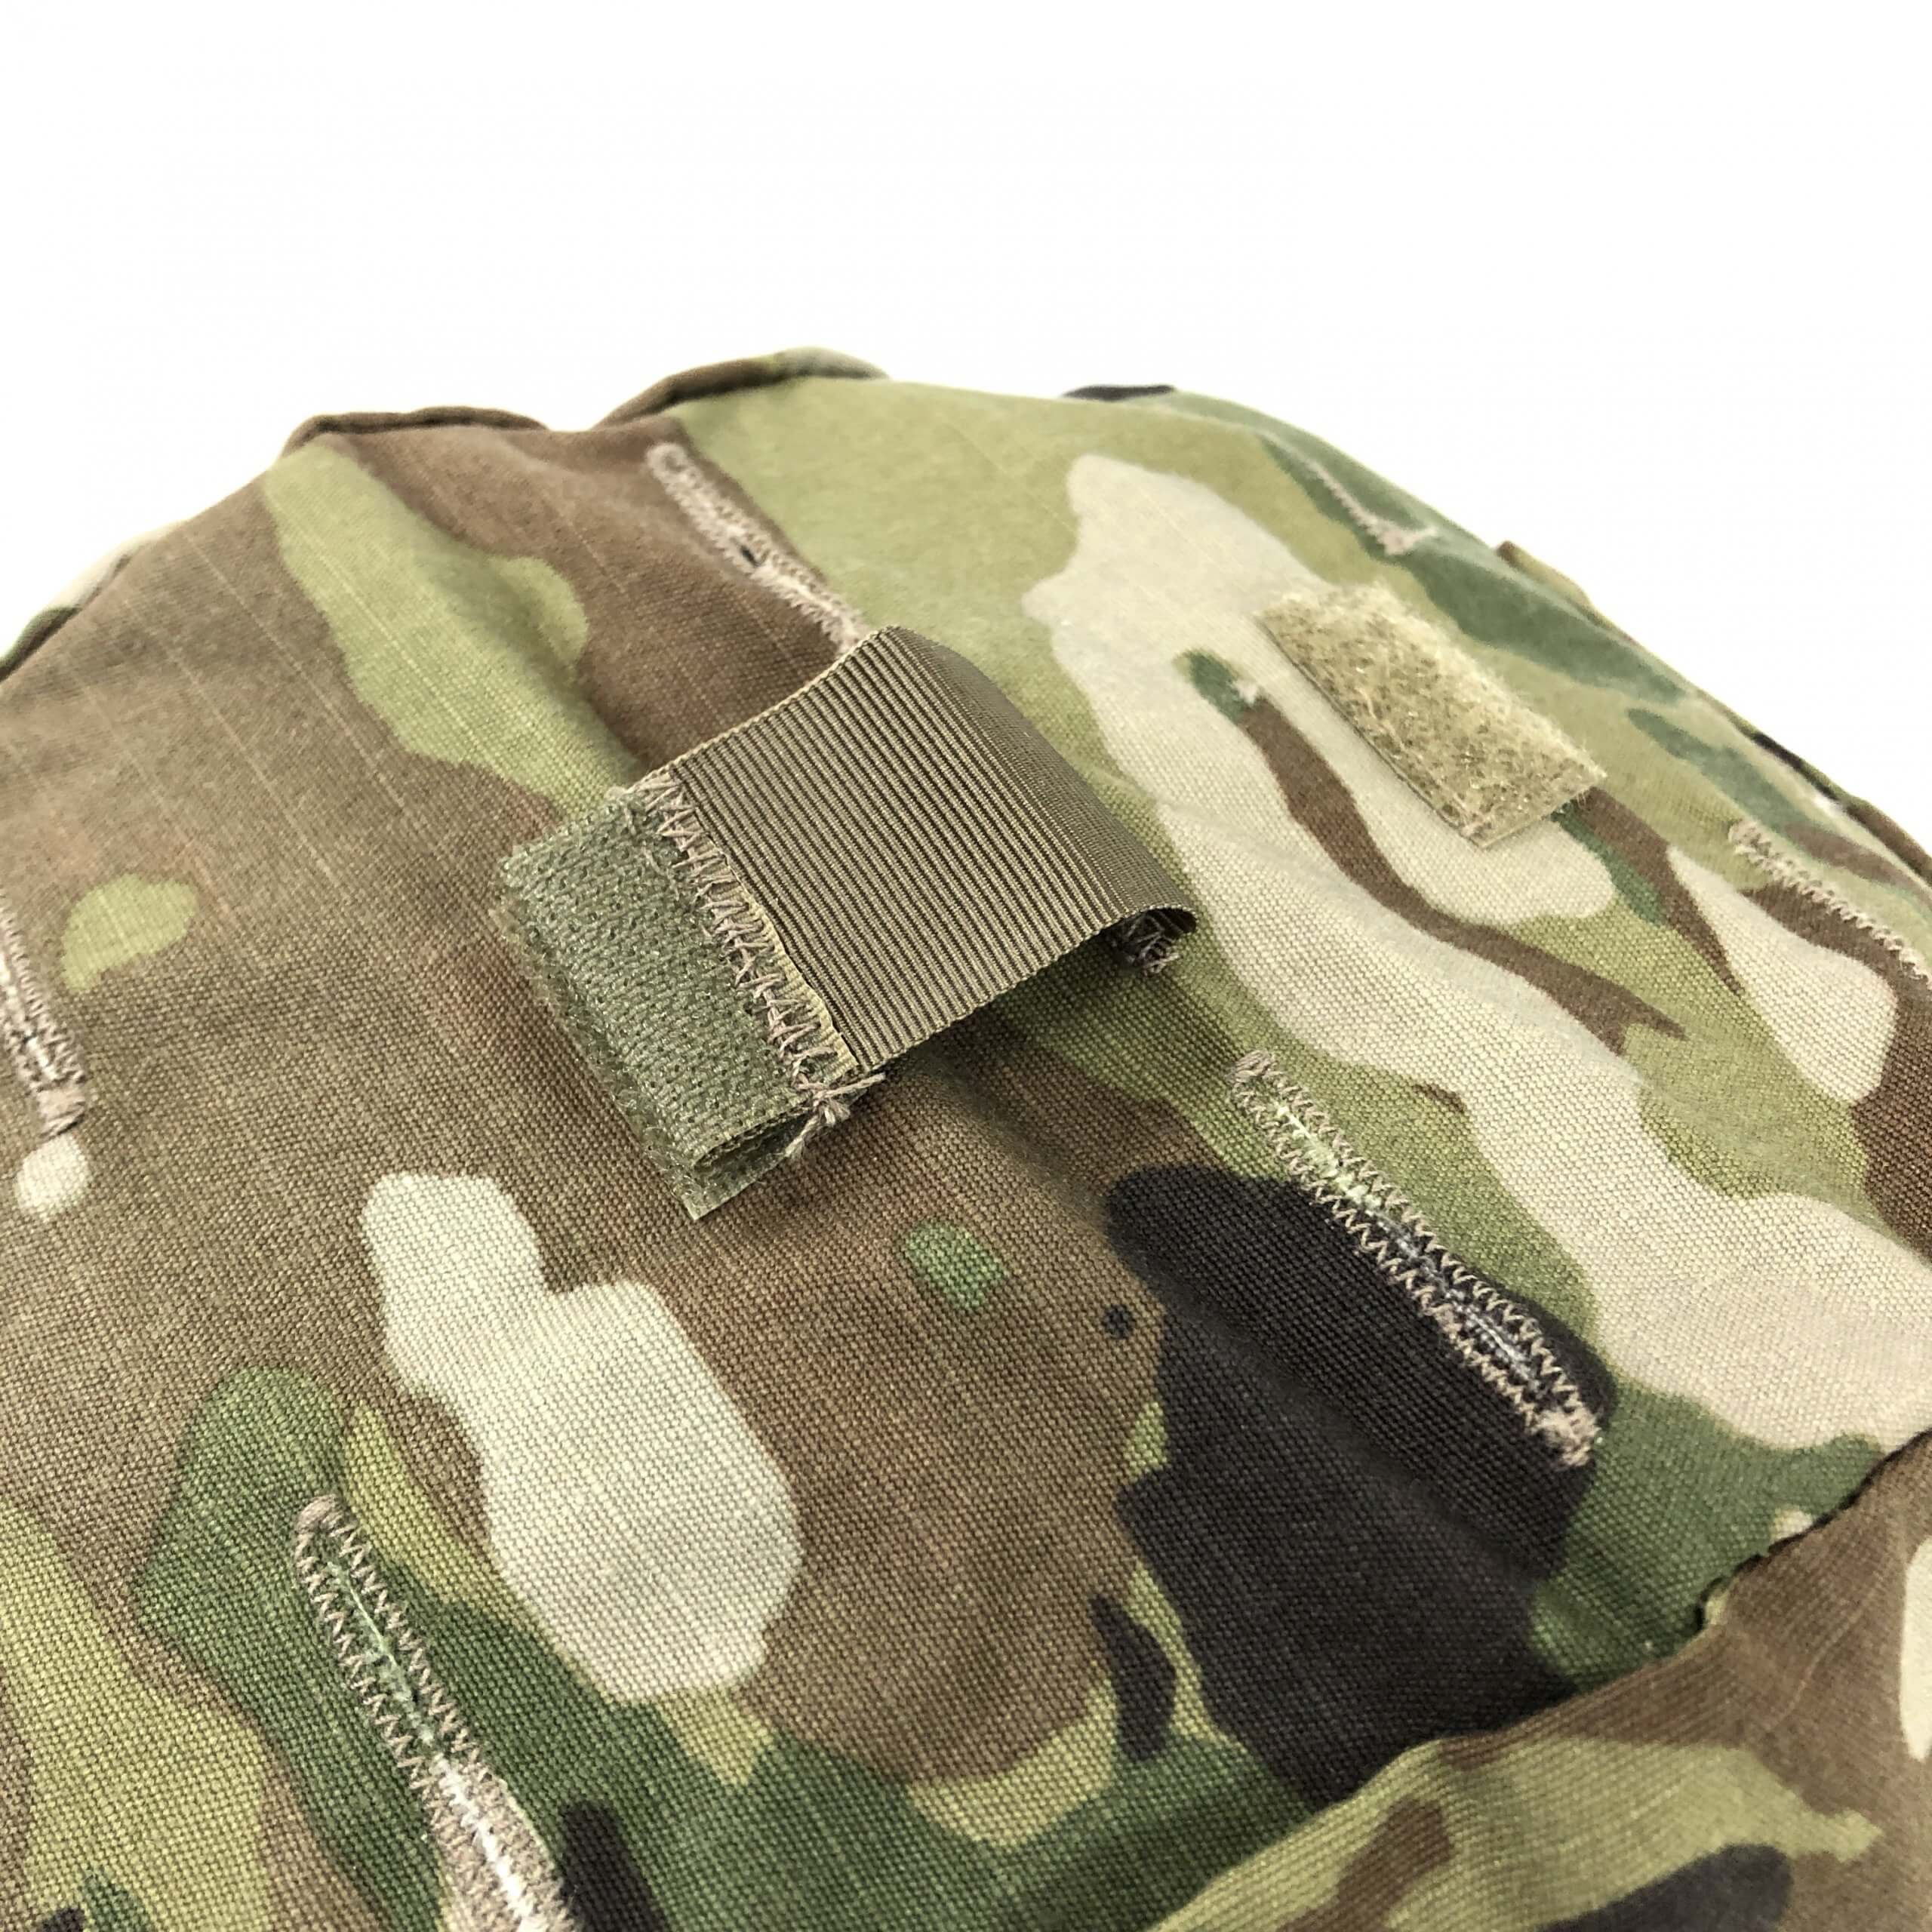 Military MICH/ACH Advanced Combat Multicam Helmet Cover